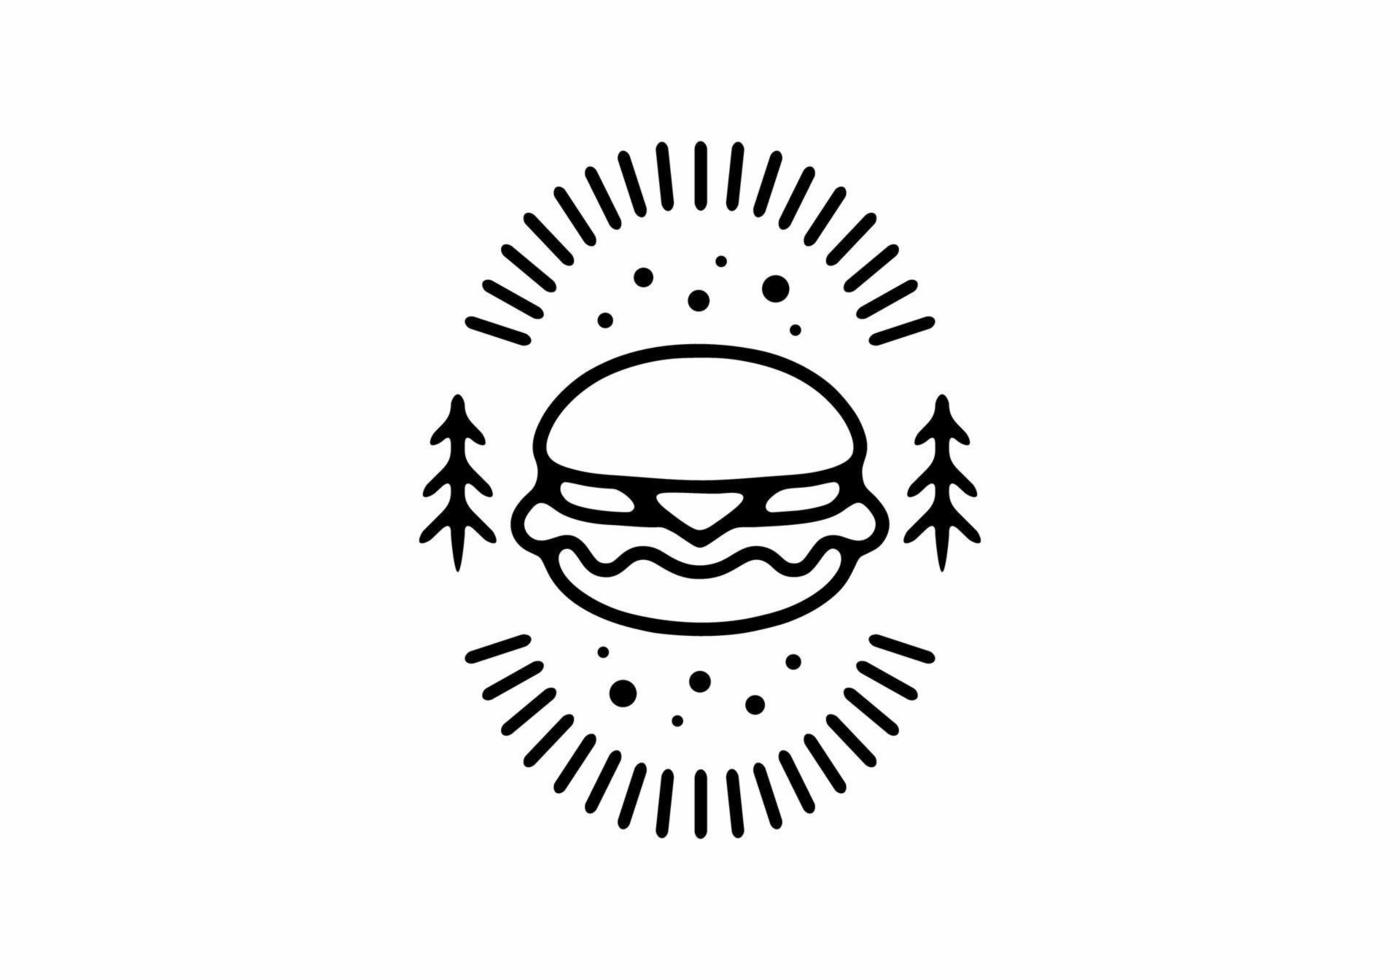 Black line art of burger badge vector